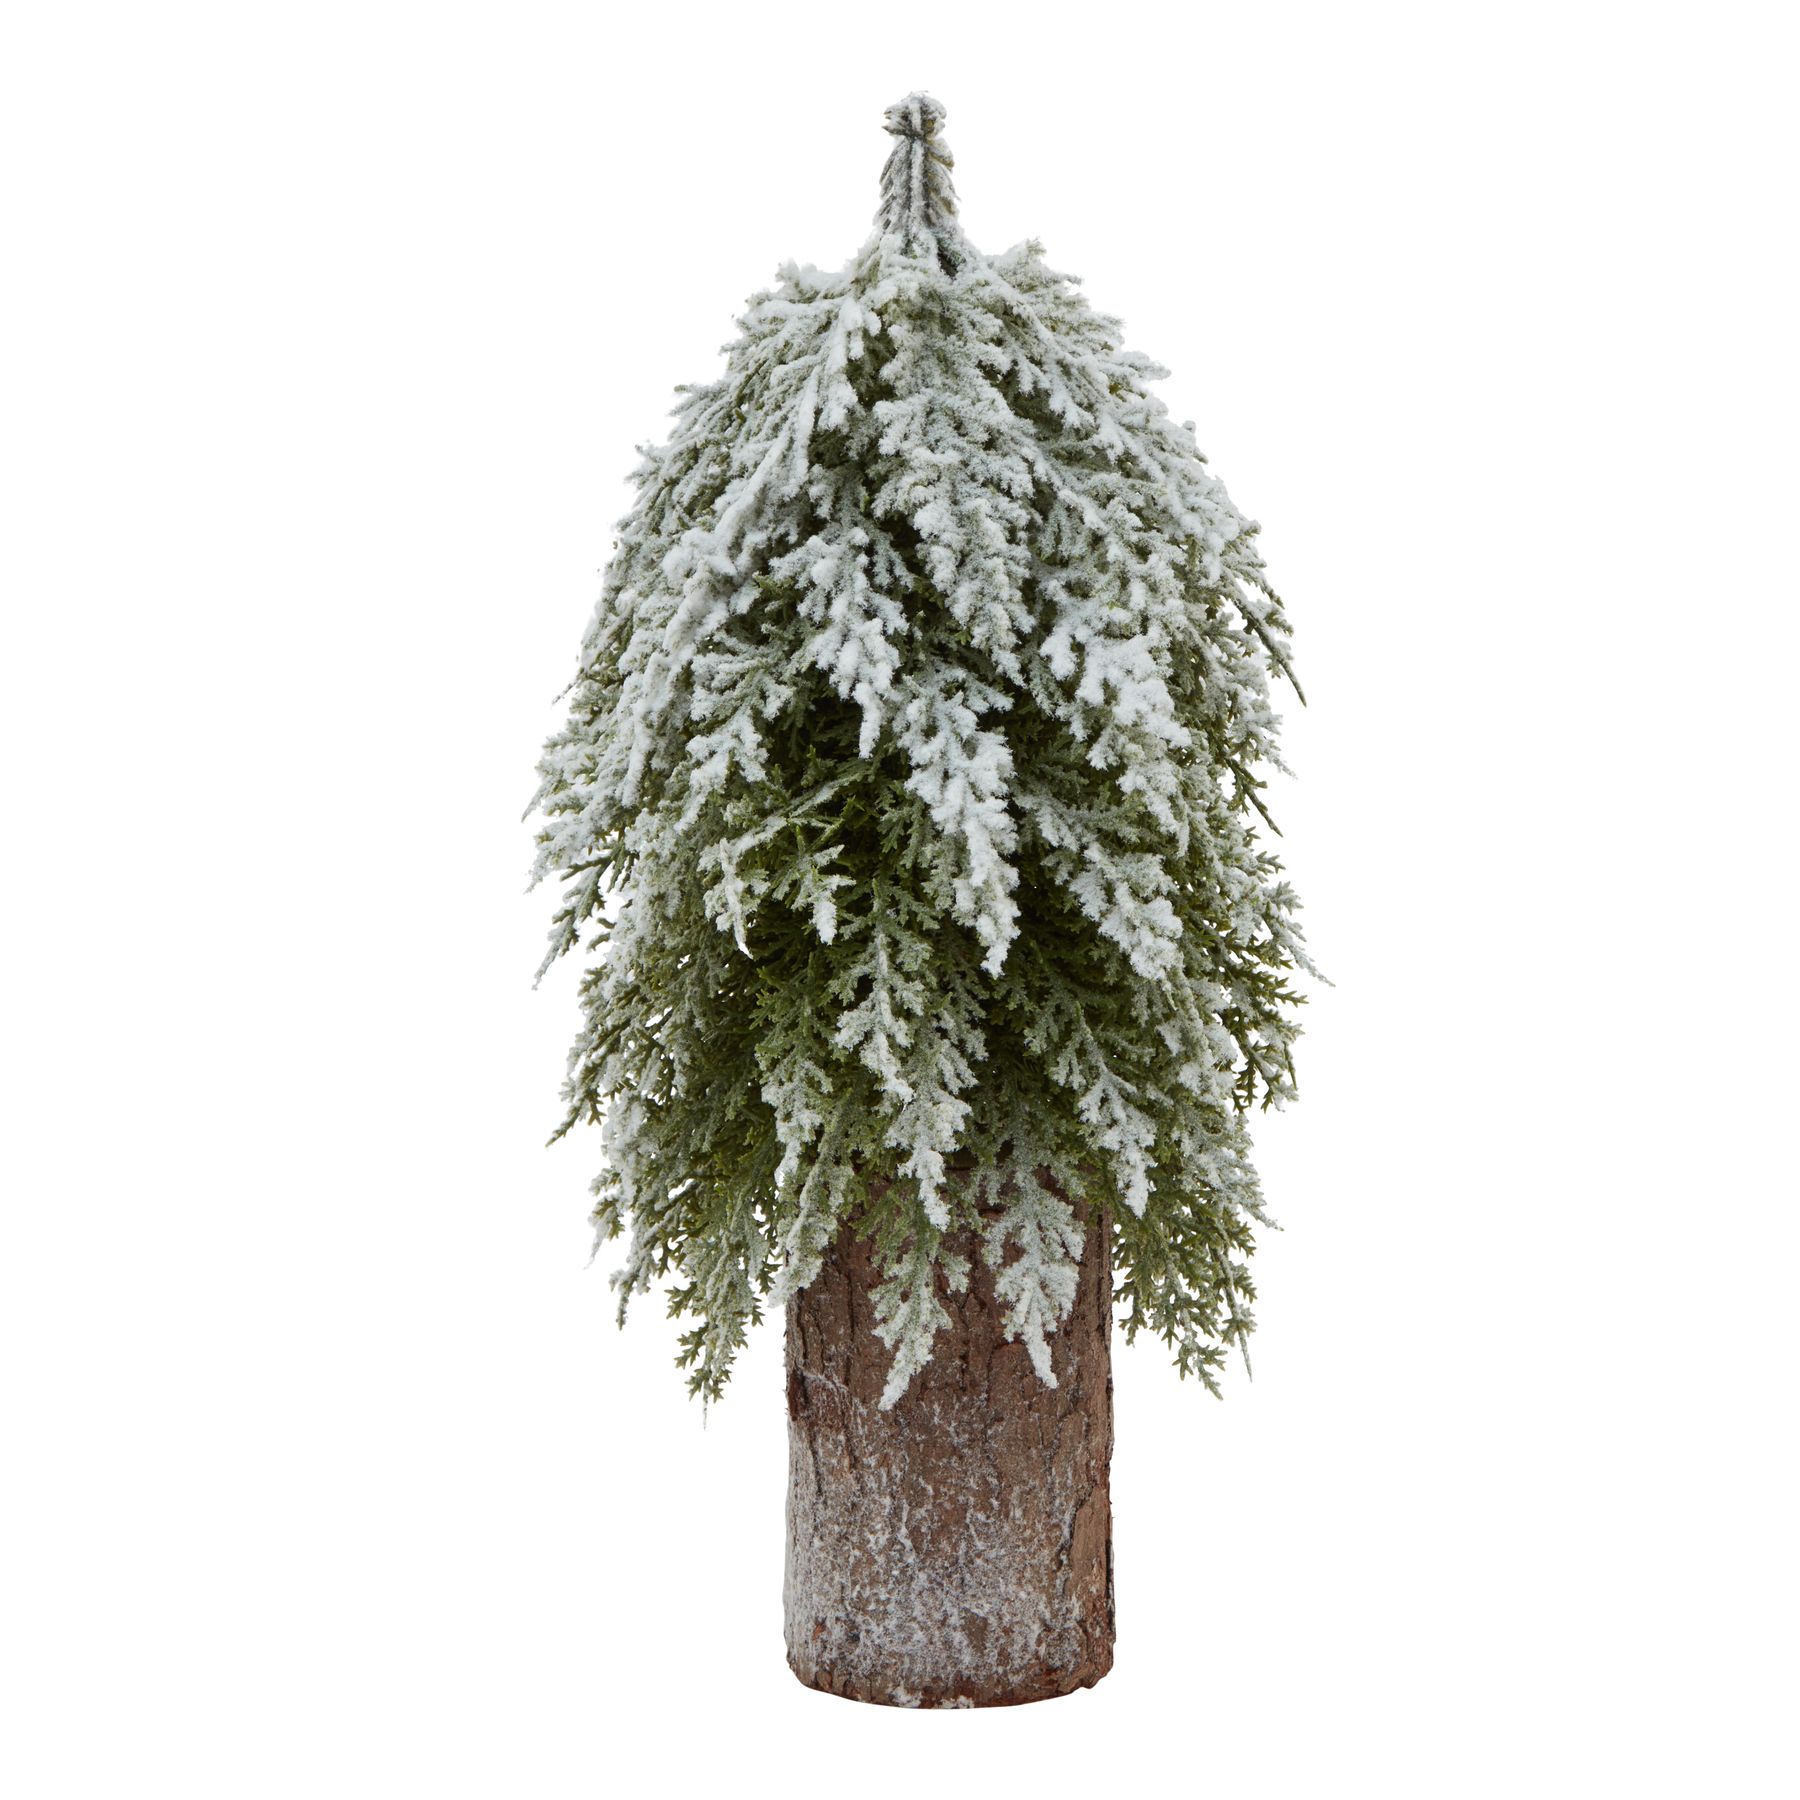 Small Snowy Fir Tree On Tall Wood Log - Image 1